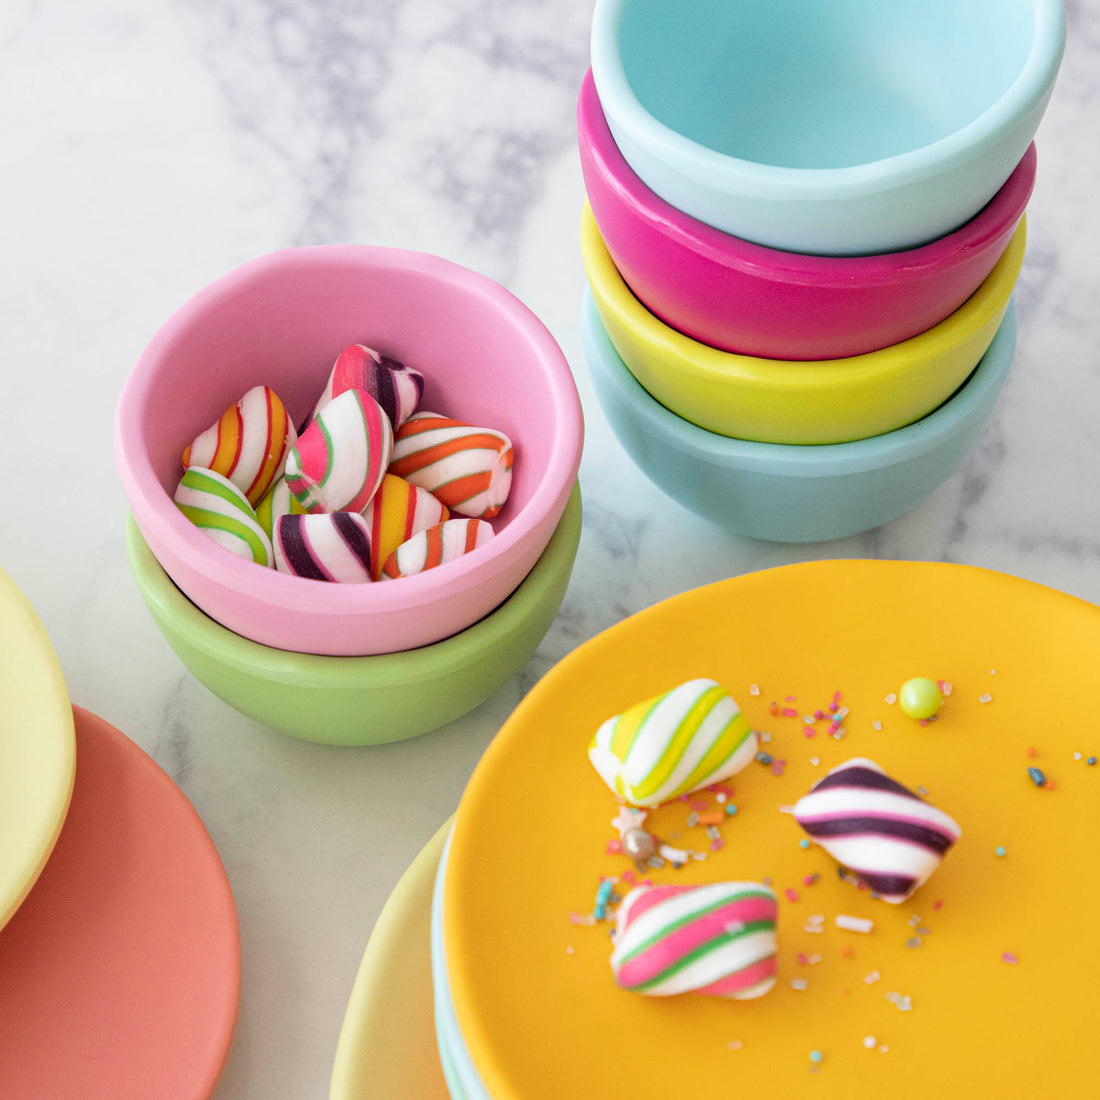 A set of colorful, dishwasher-safe Glitterville Rainbow Melamine Trinket Bowls on a table.